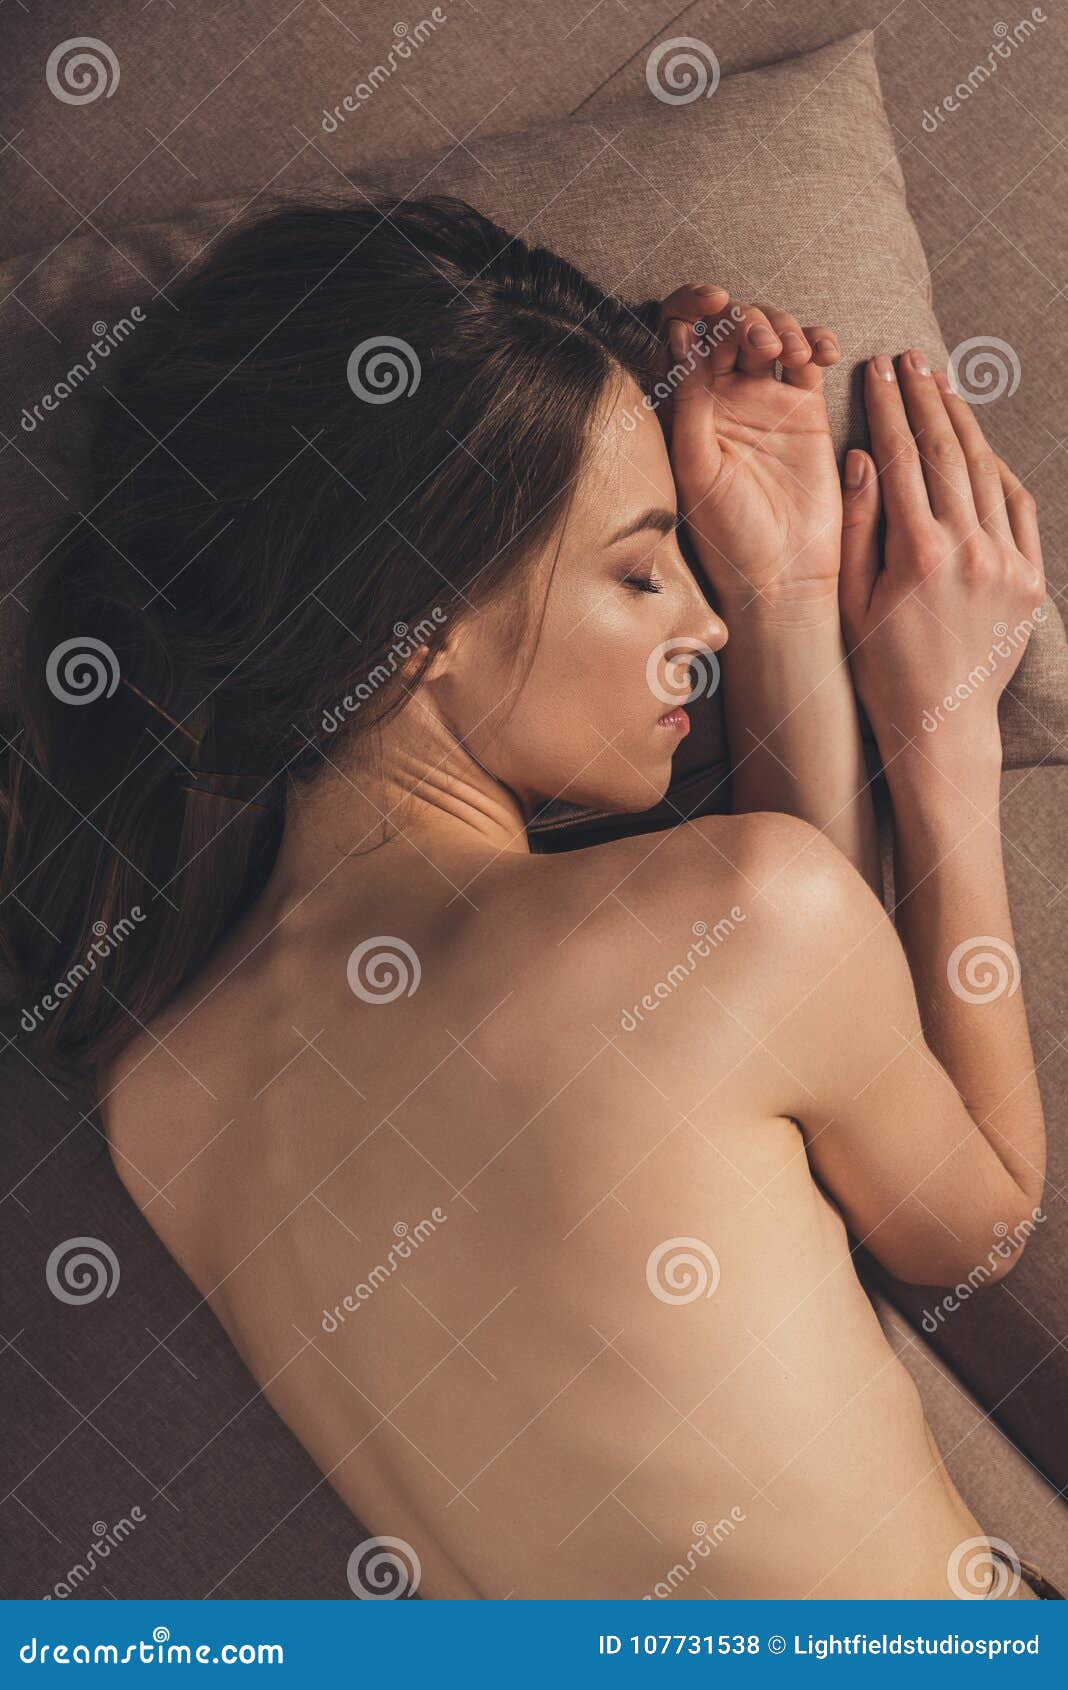 Woman Sleeping Nude